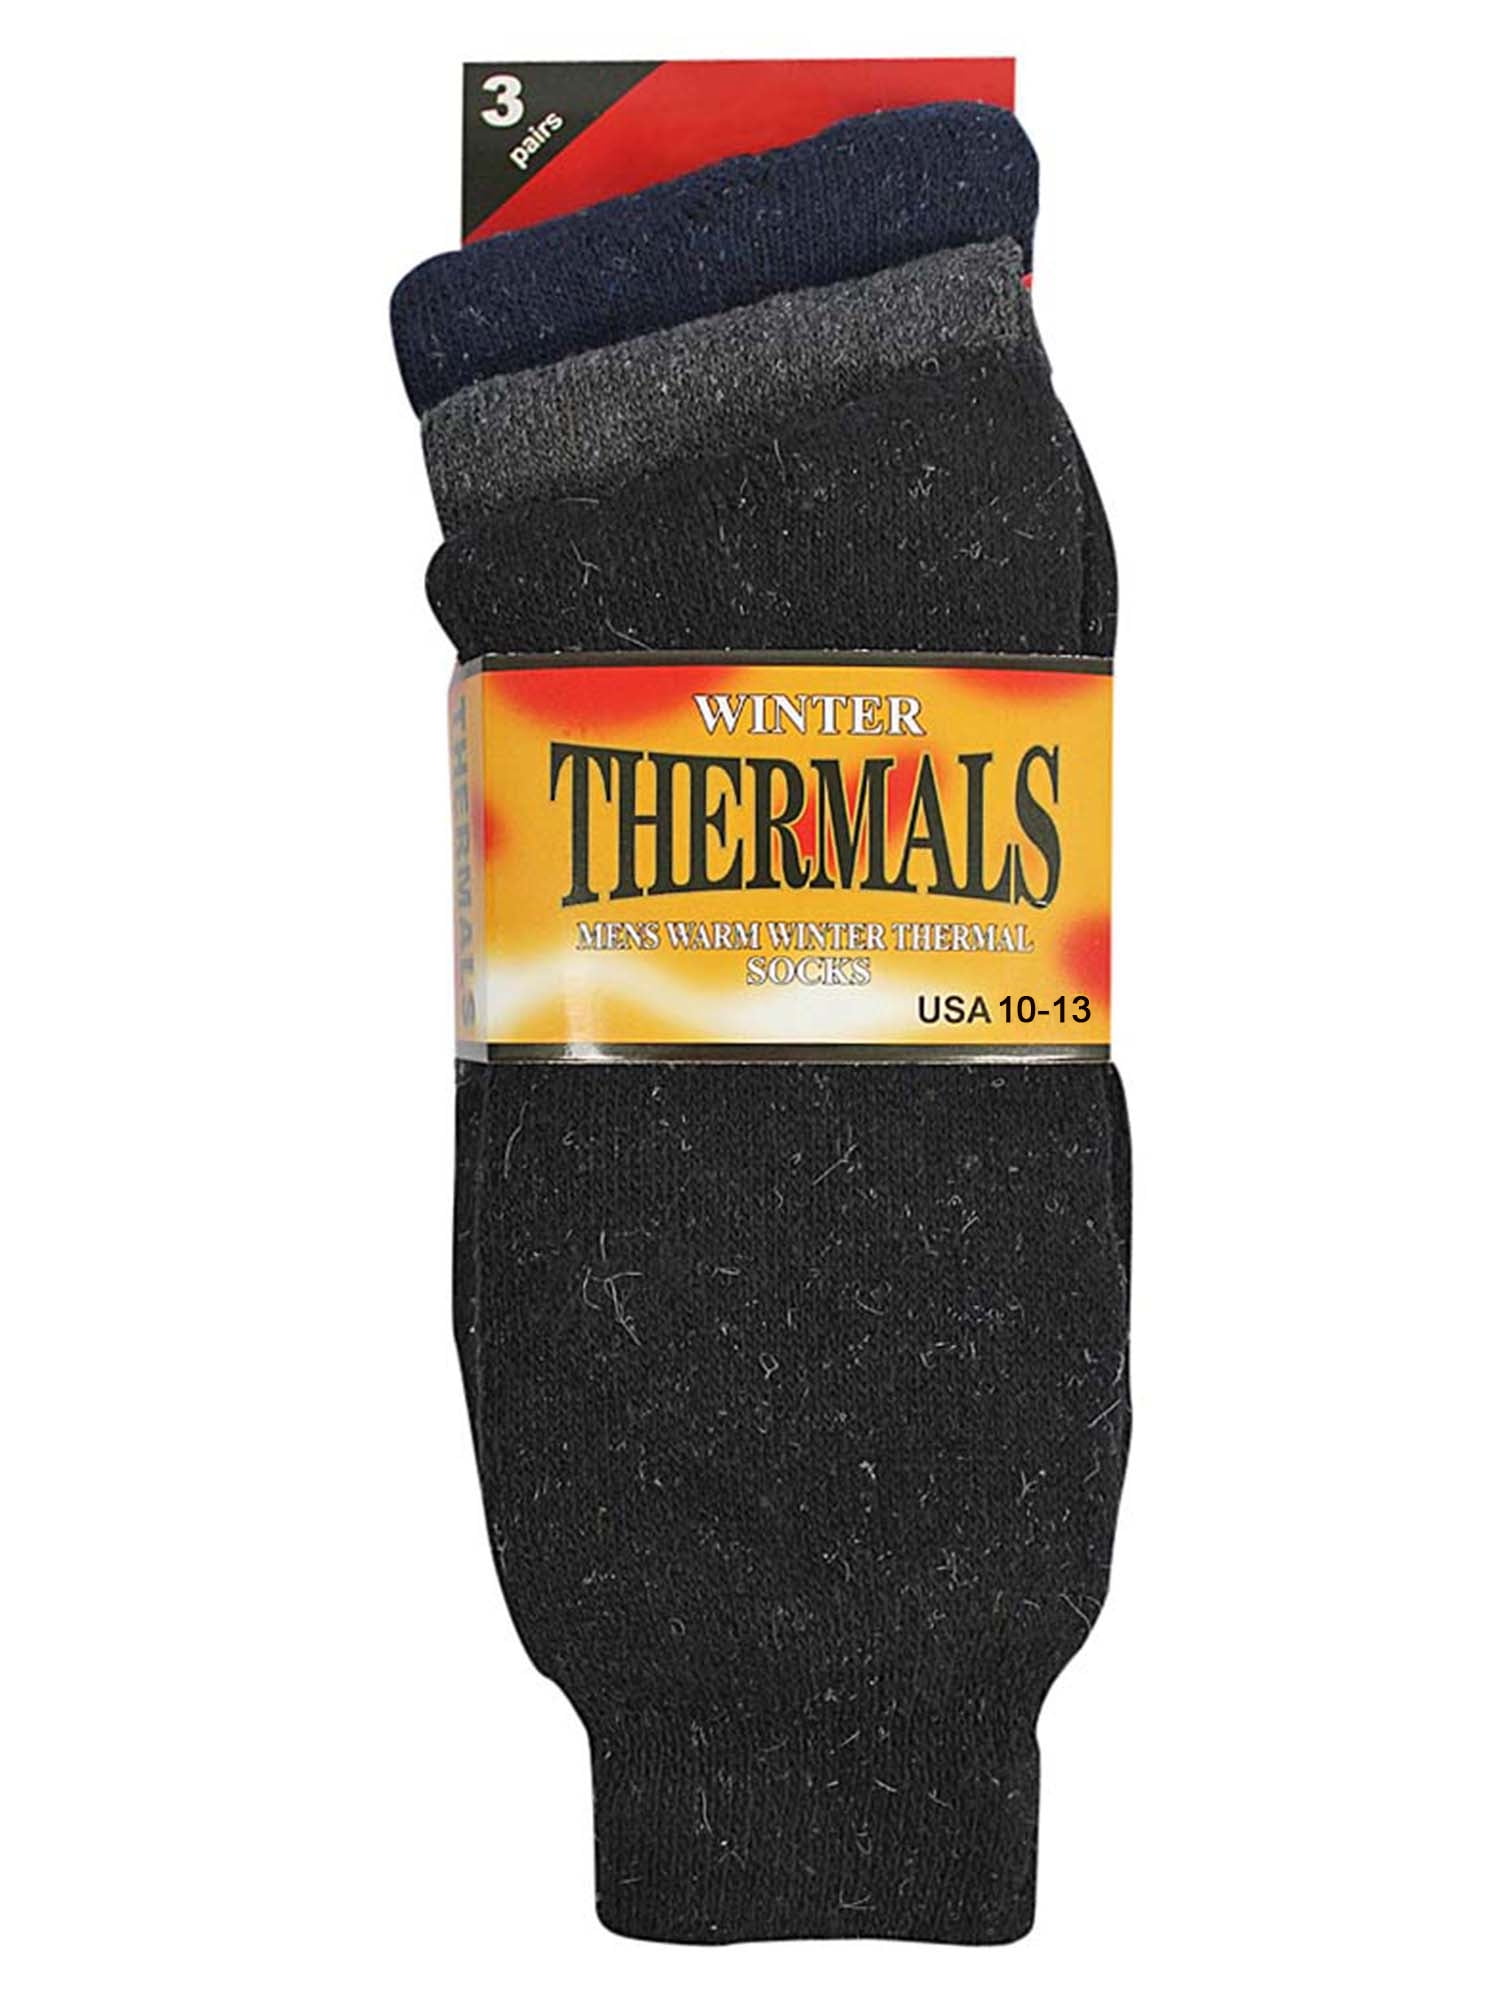 Size 9-11 $averPak 4 Pair Ruggeds Cotton Blend Thermal Socks 